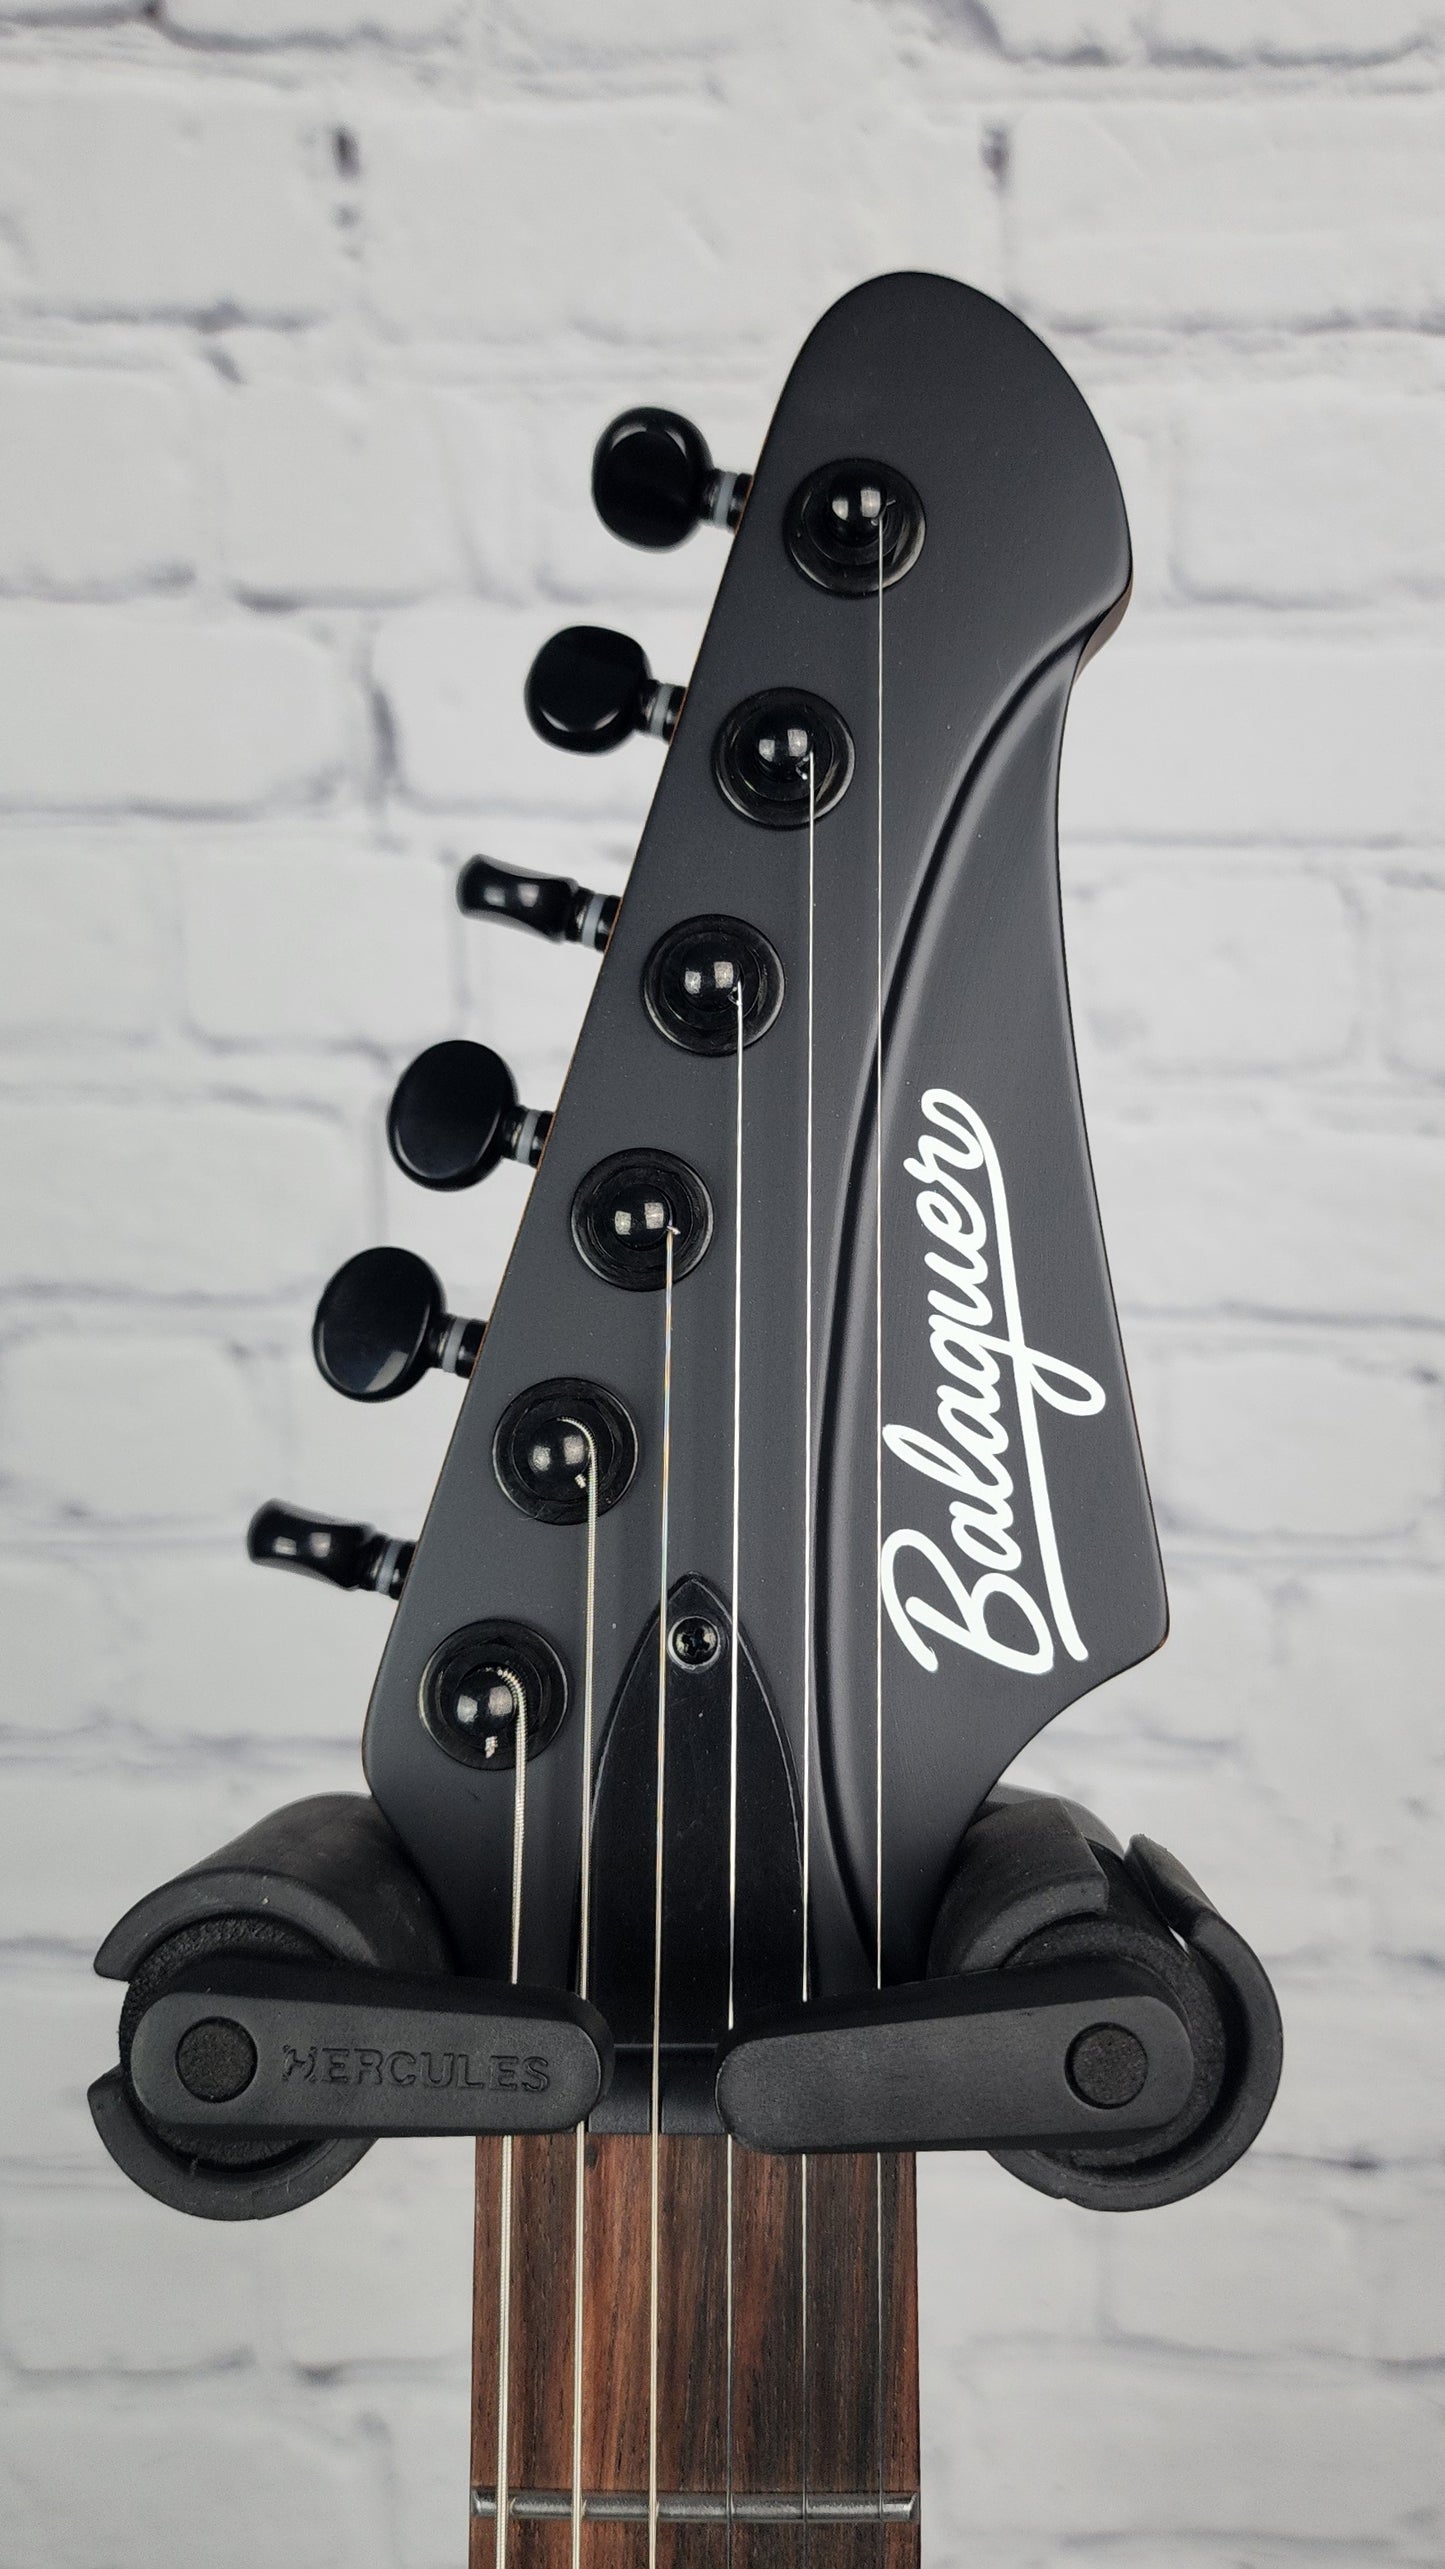 Balaguer Guitars Select Espada 6 String Electric Guitar Matte Black Friday Limited Edition